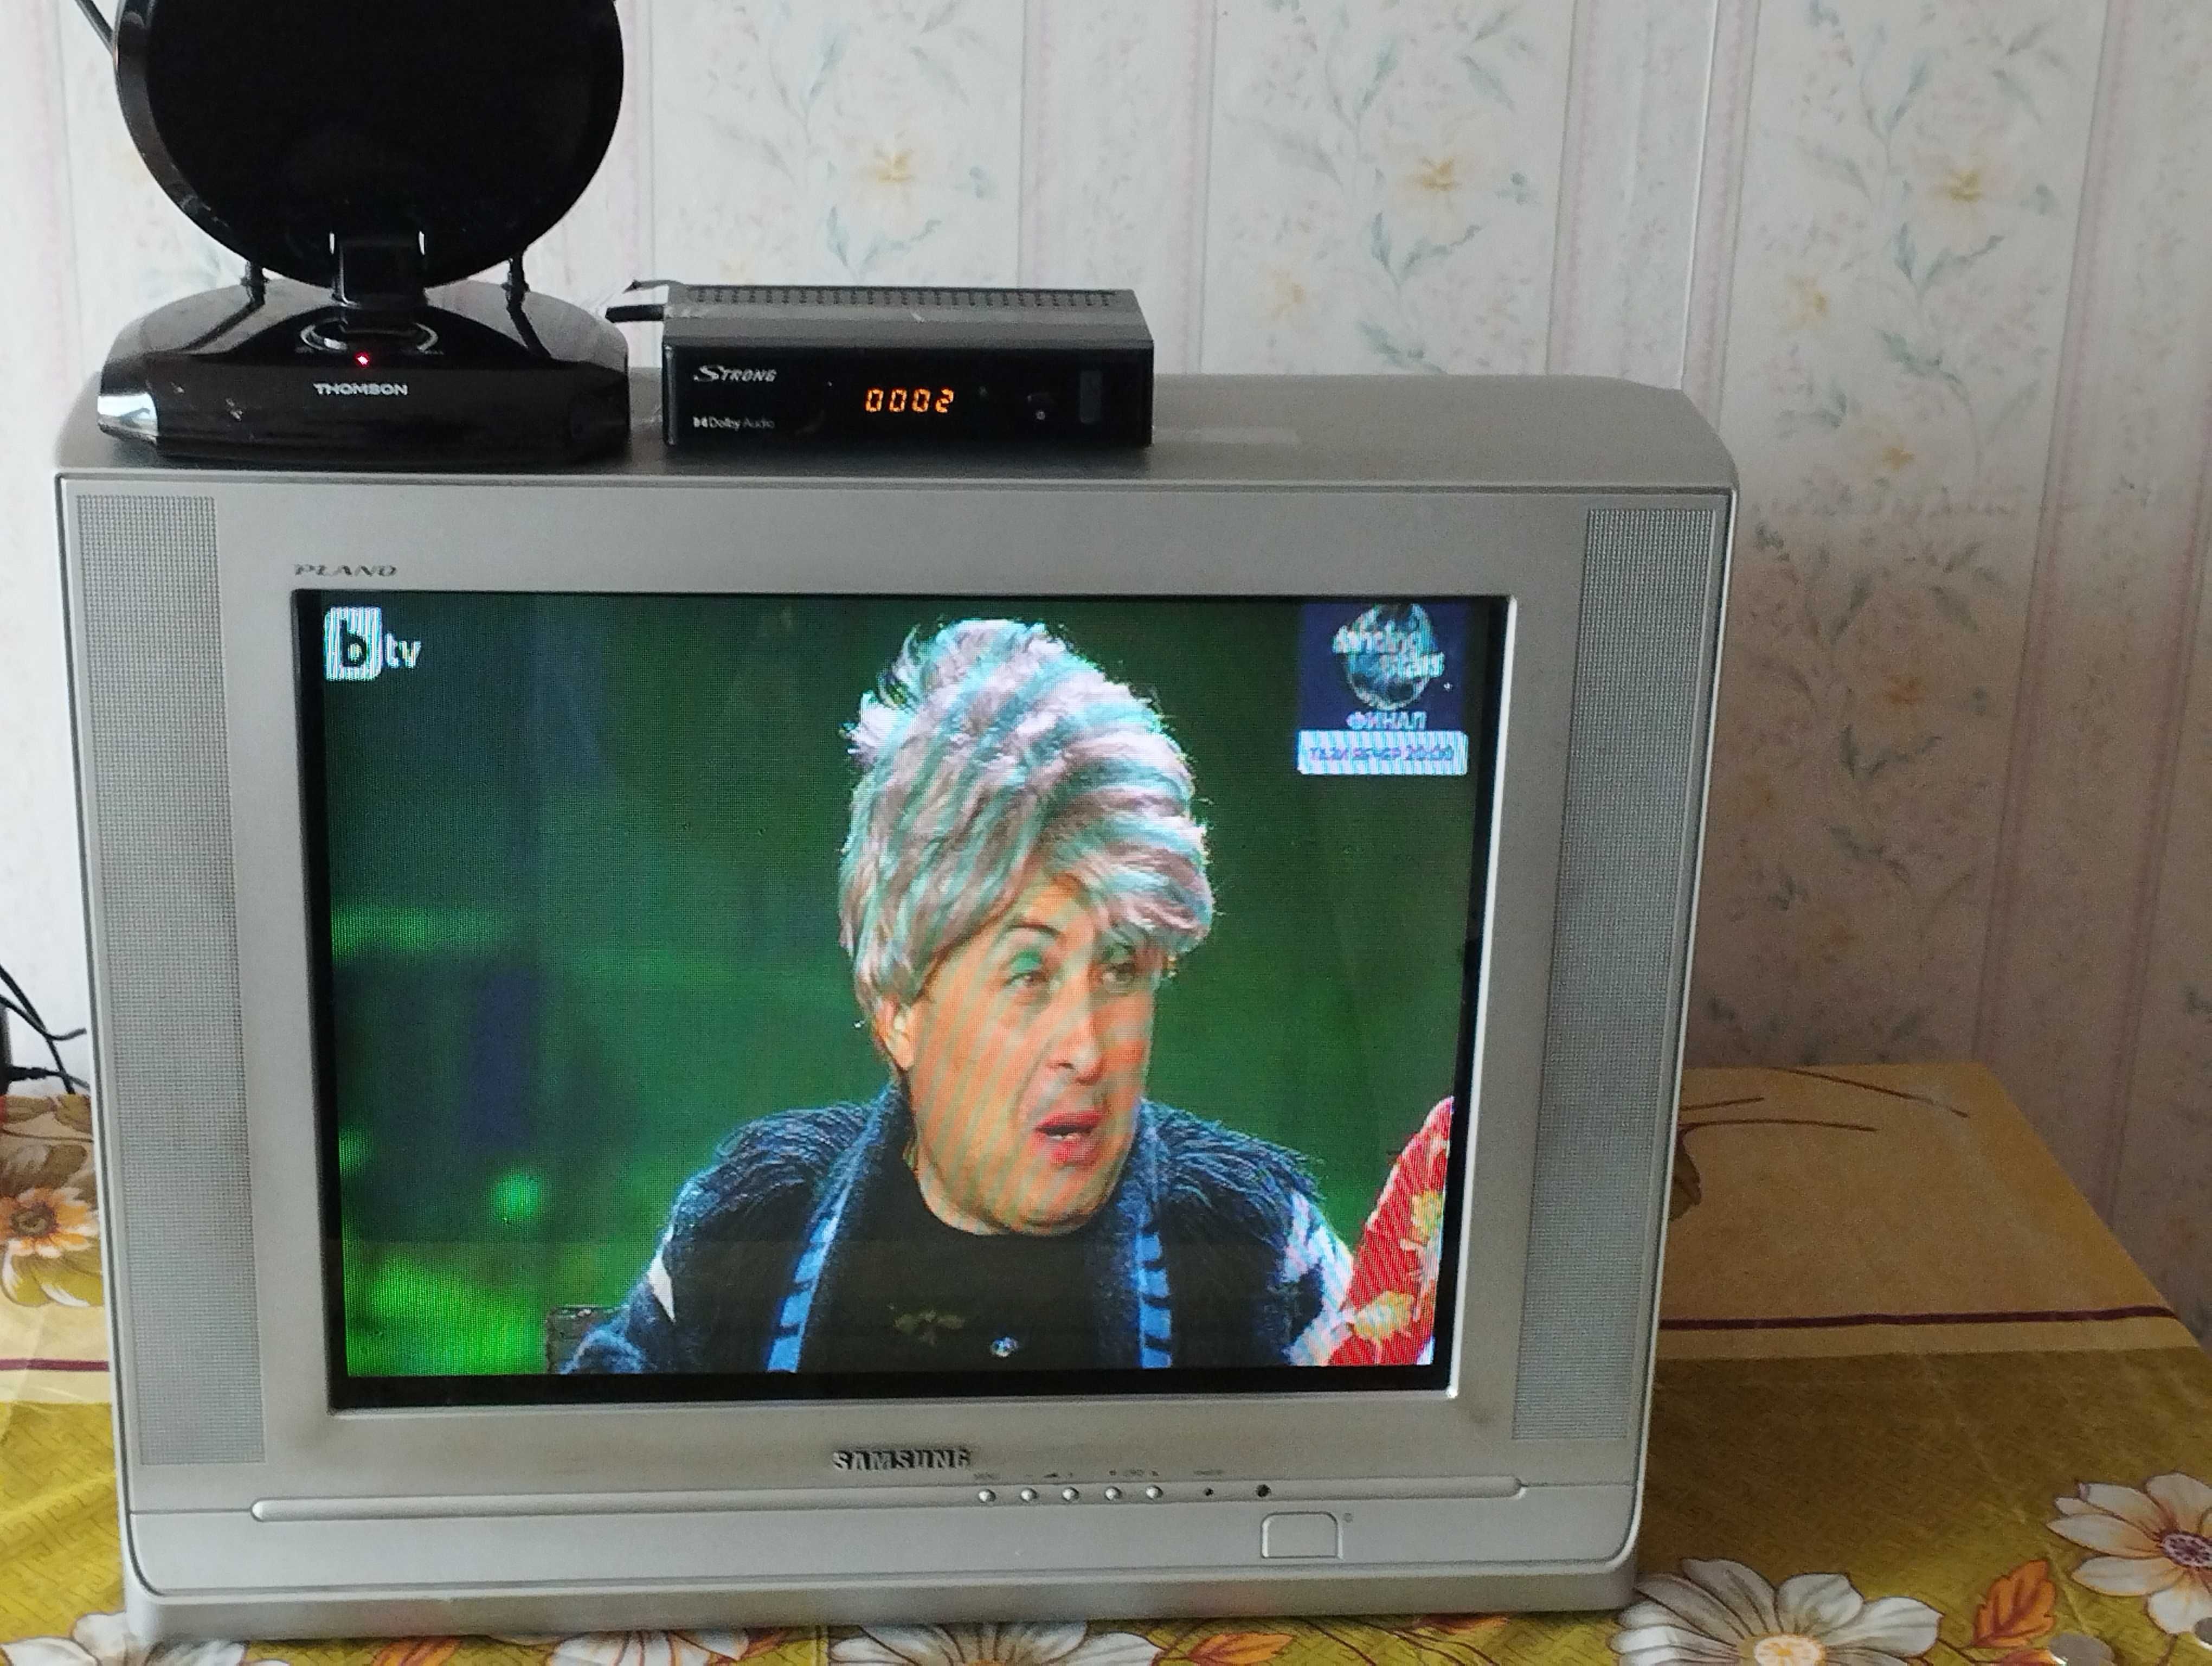 Голям телевизор Samsung,плосък екран 21 "(42/32 см) с кинескоп.